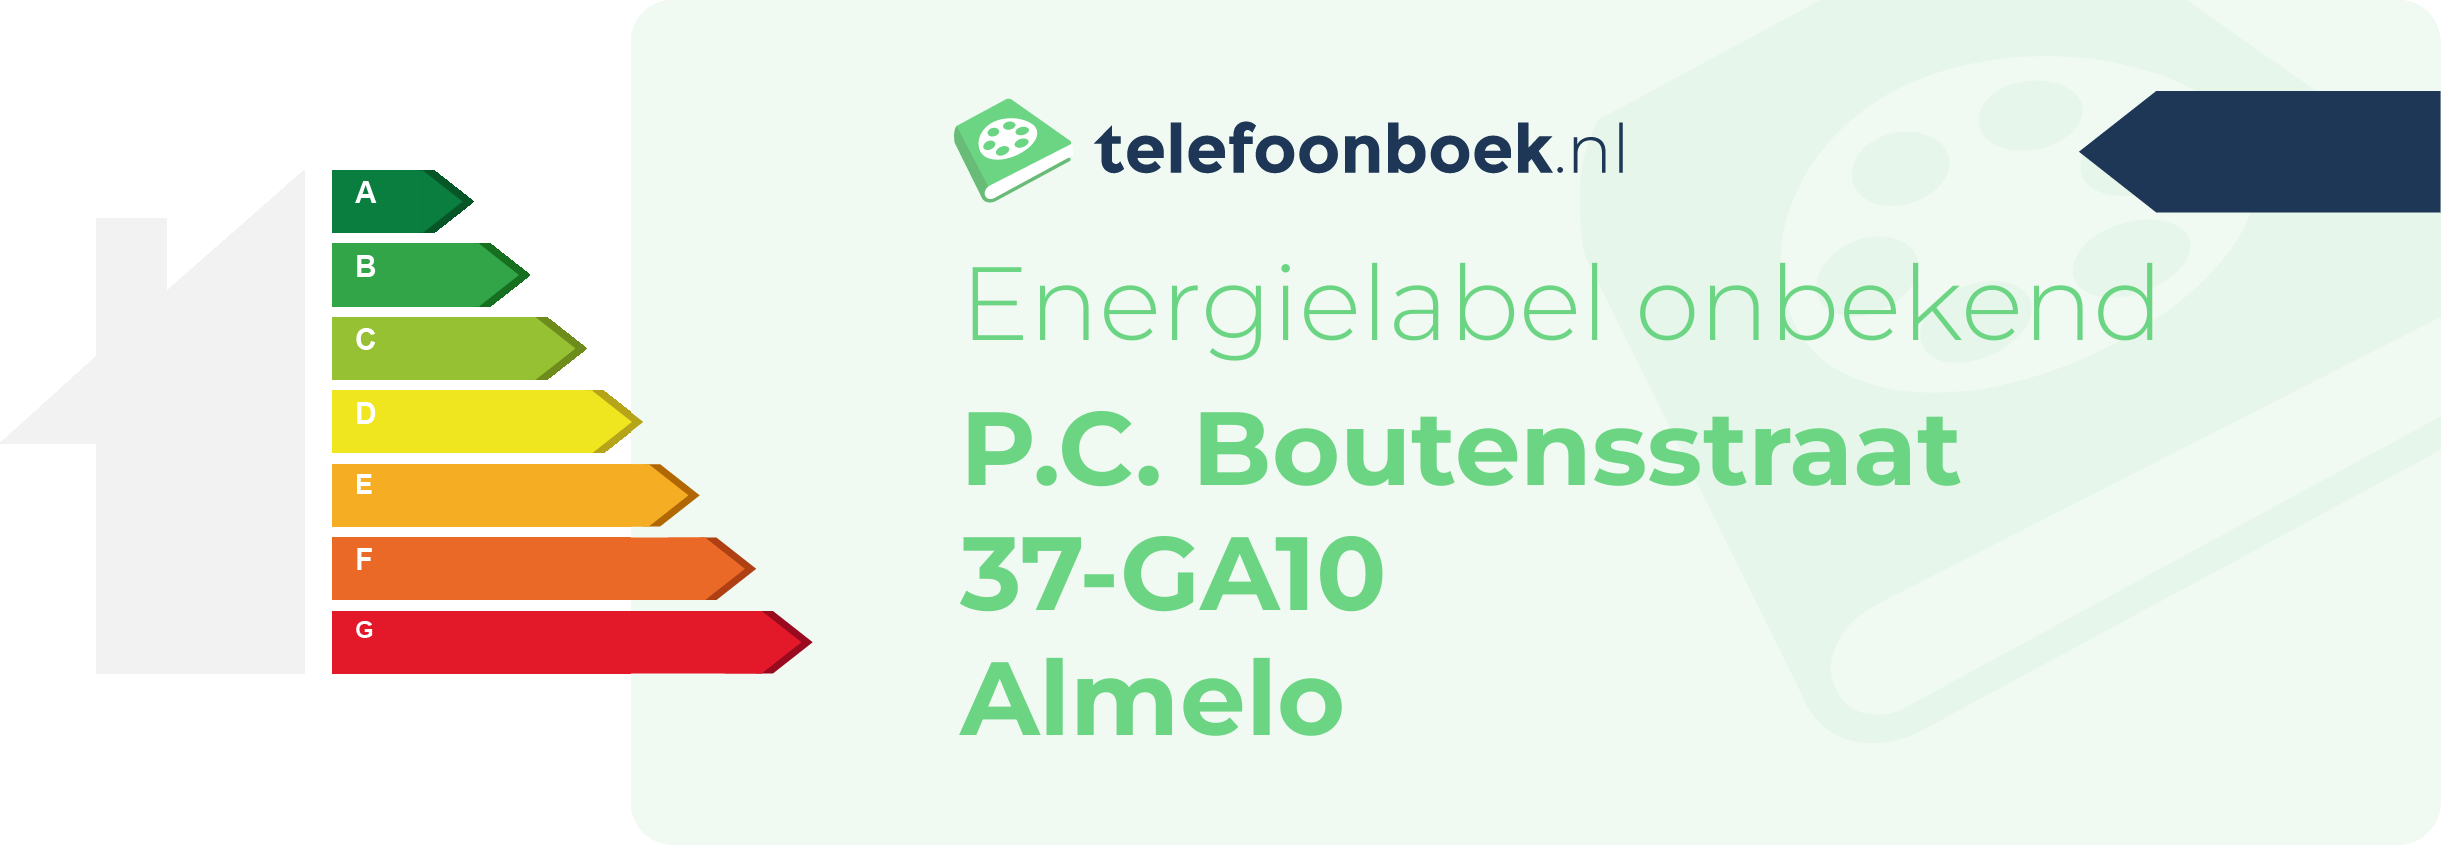 Energielabel P.C. Boutensstraat 37-GA10 Almelo